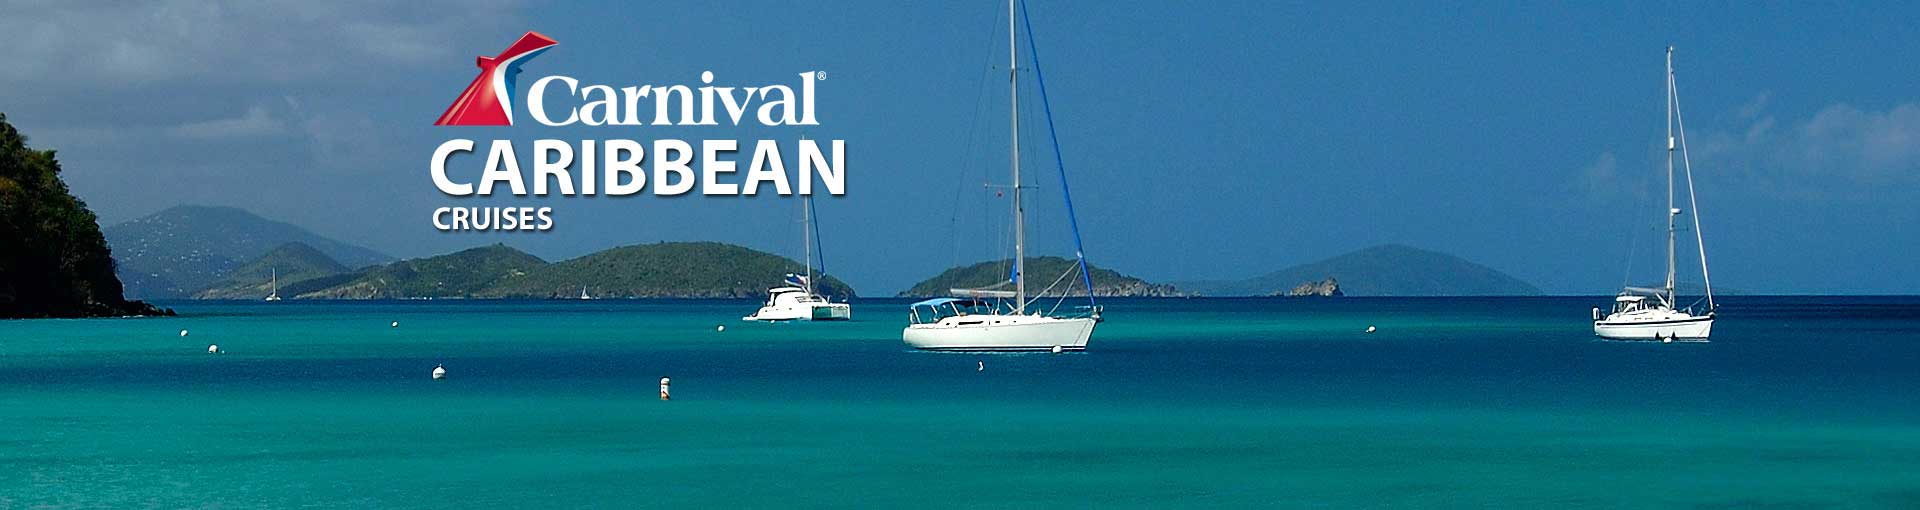 carnival cruise line caribbean destinations